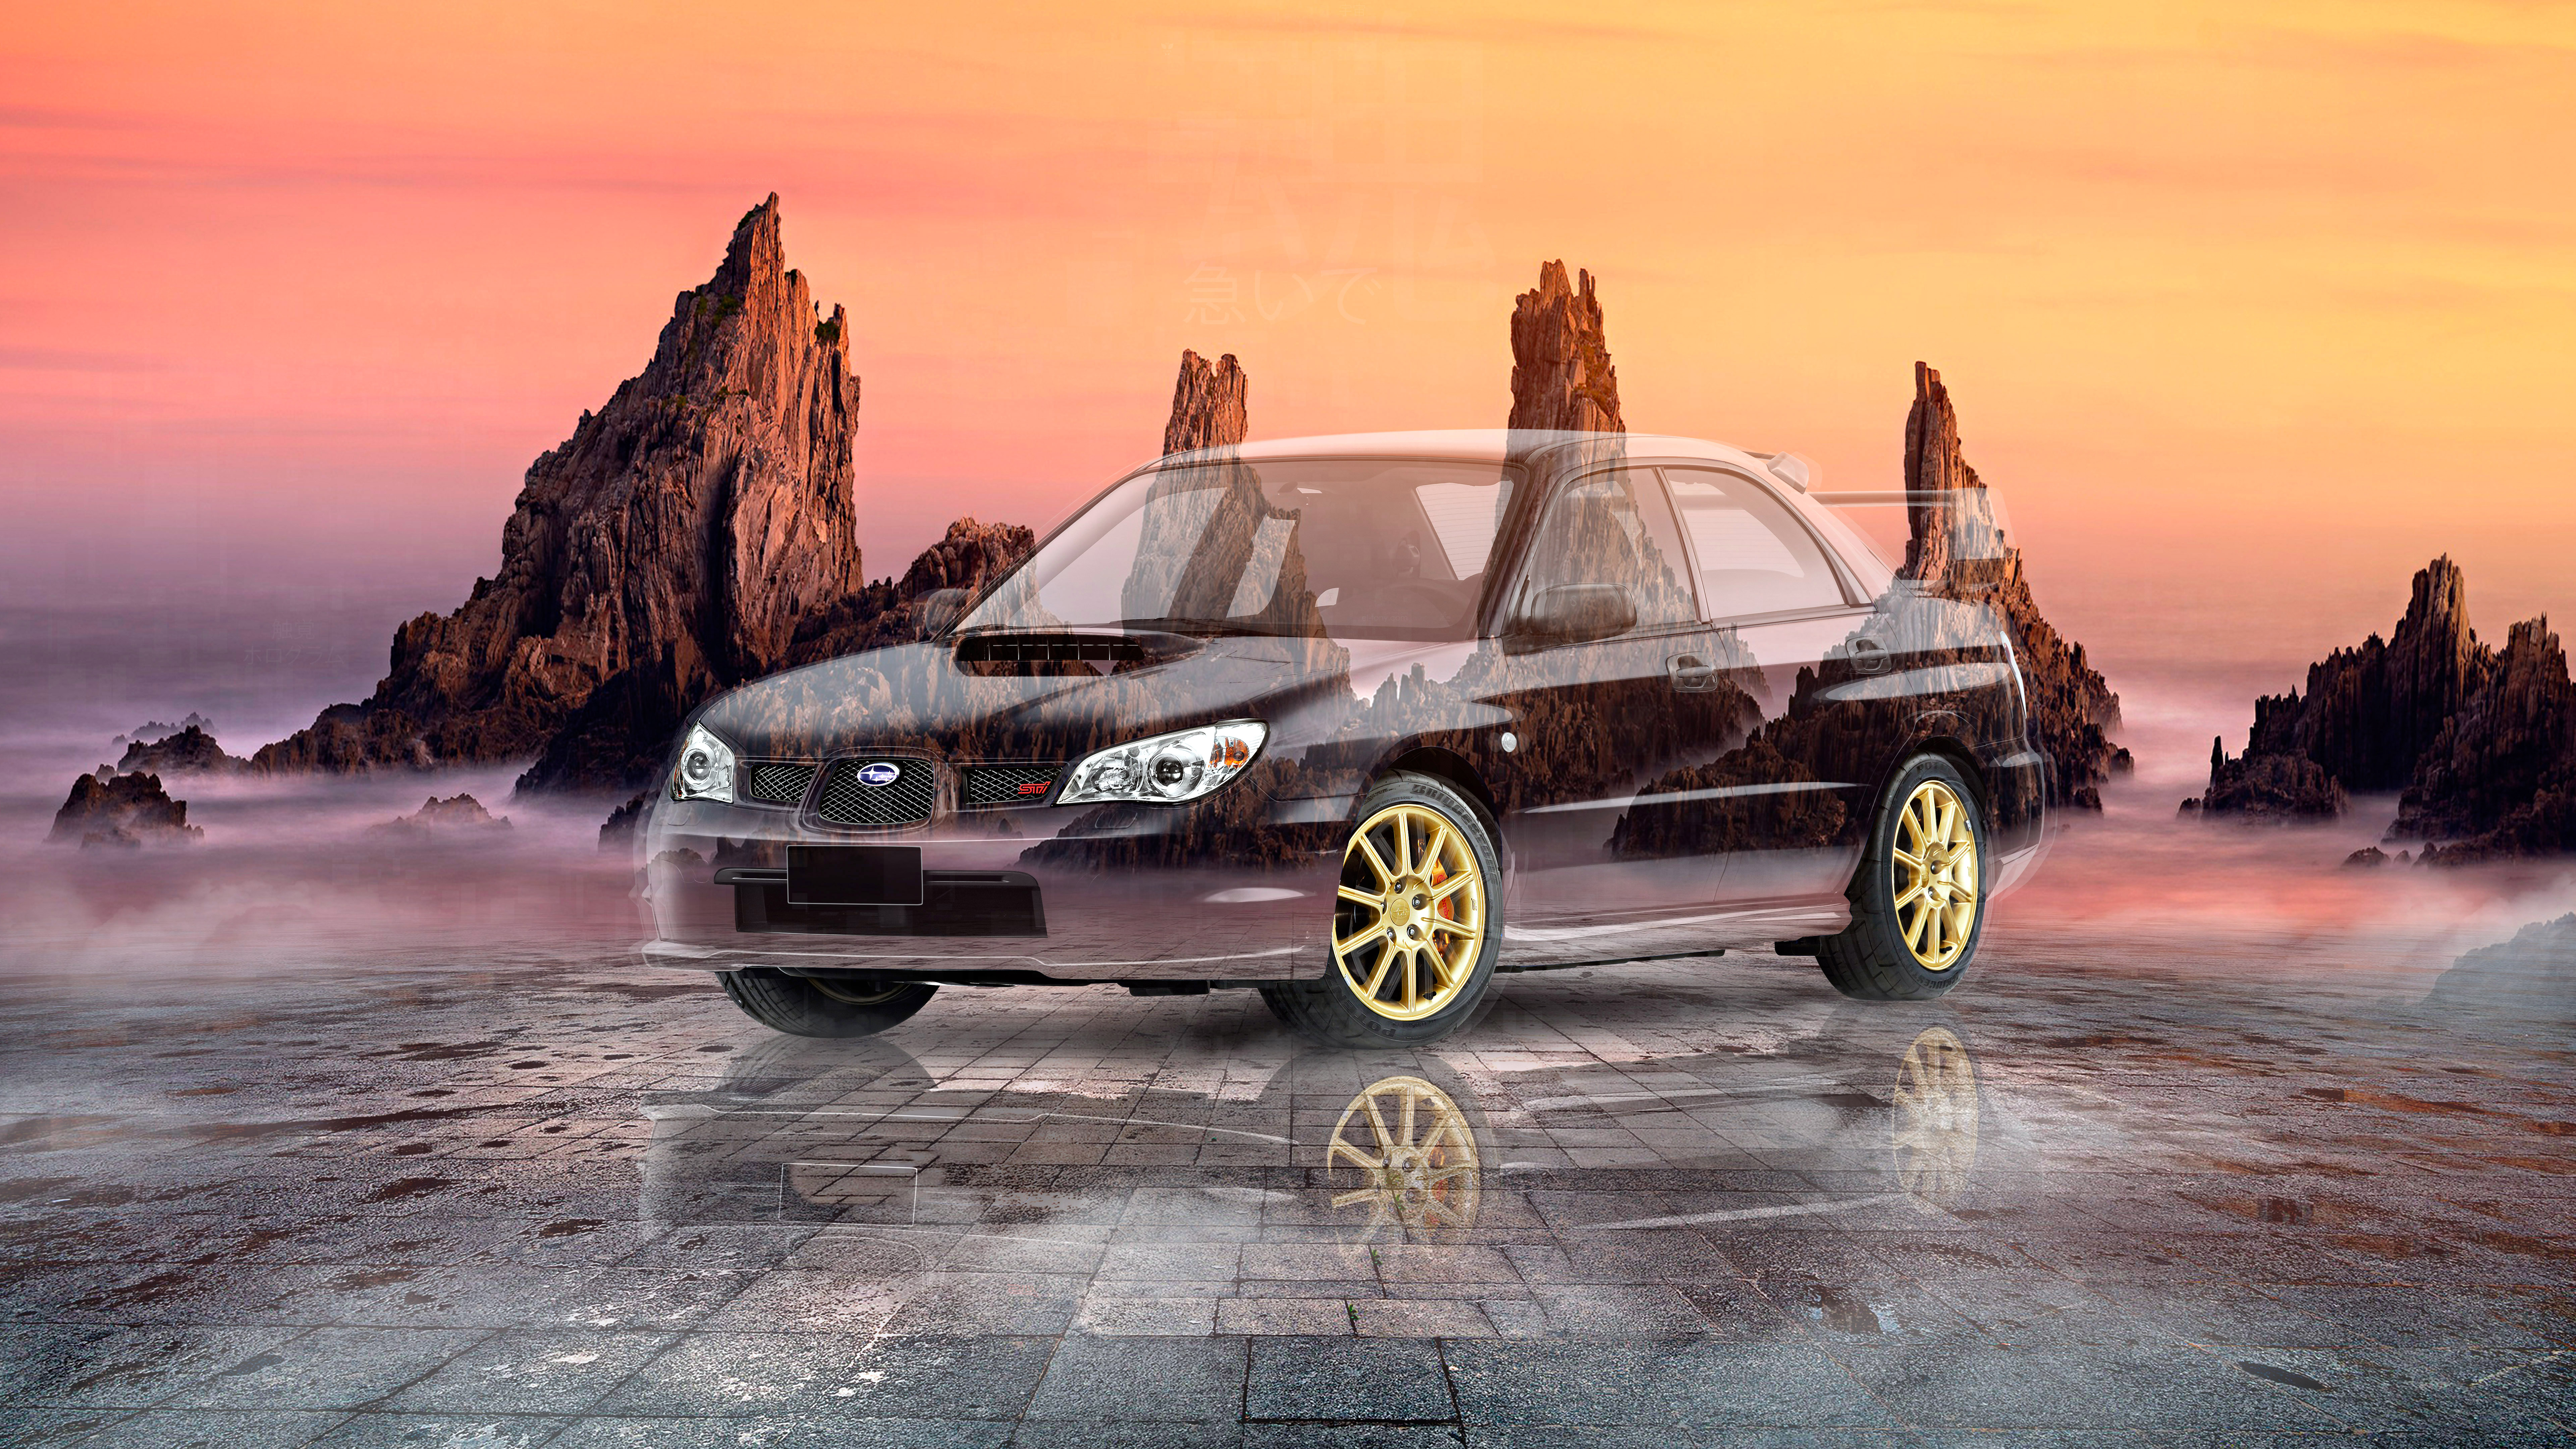 Subaru-Impreza-WRX-STI-JDM-Super-Crystal-Hurrying-Soul-Mountains-Rocks-Sea-Tactile-Hologram-Art-Car